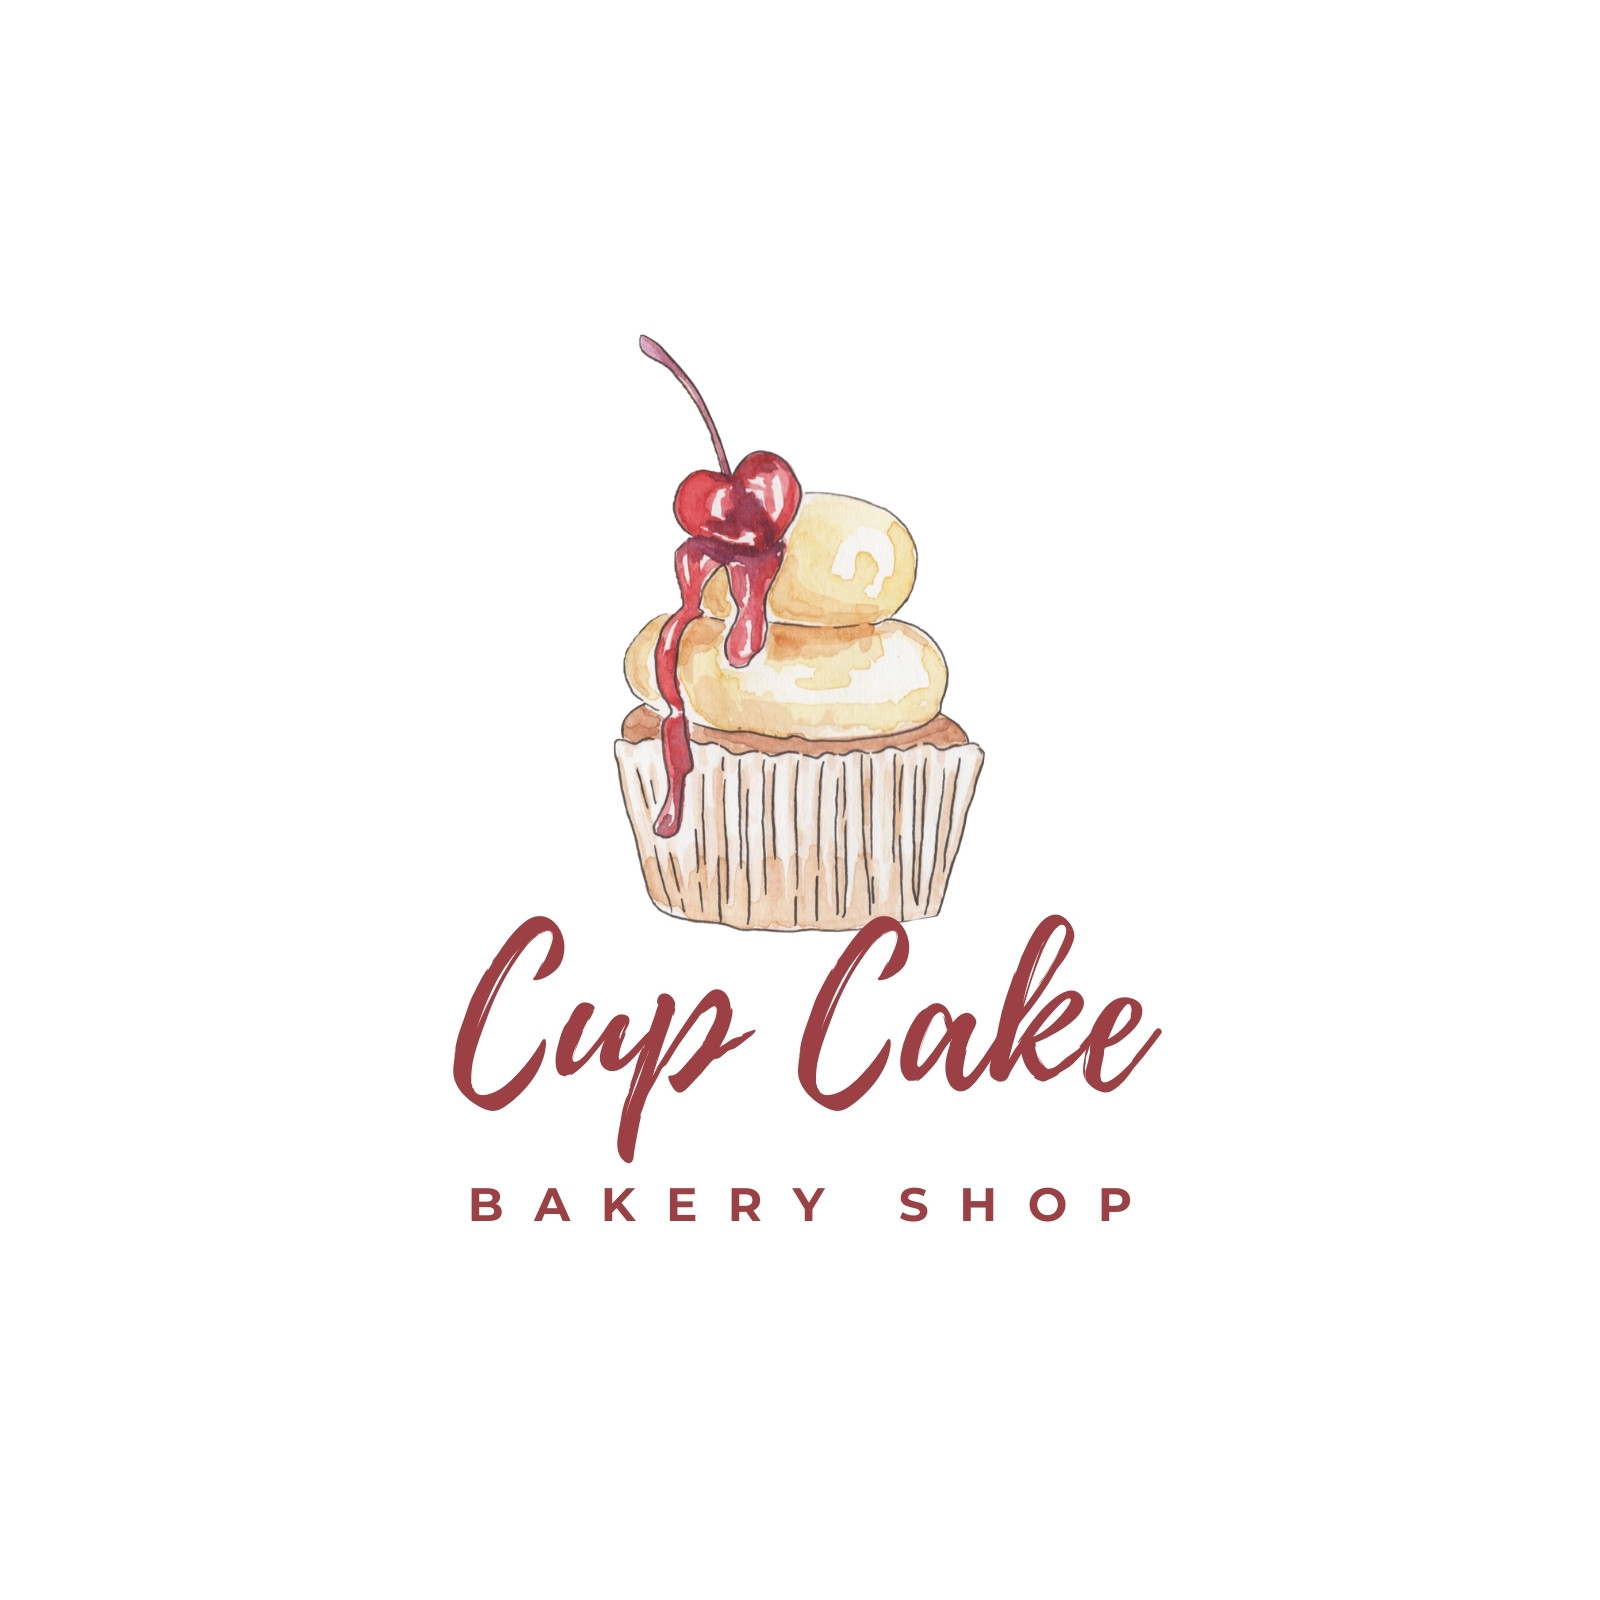 34 Cake logo design ideas | cake logo design, cake logo, logo design